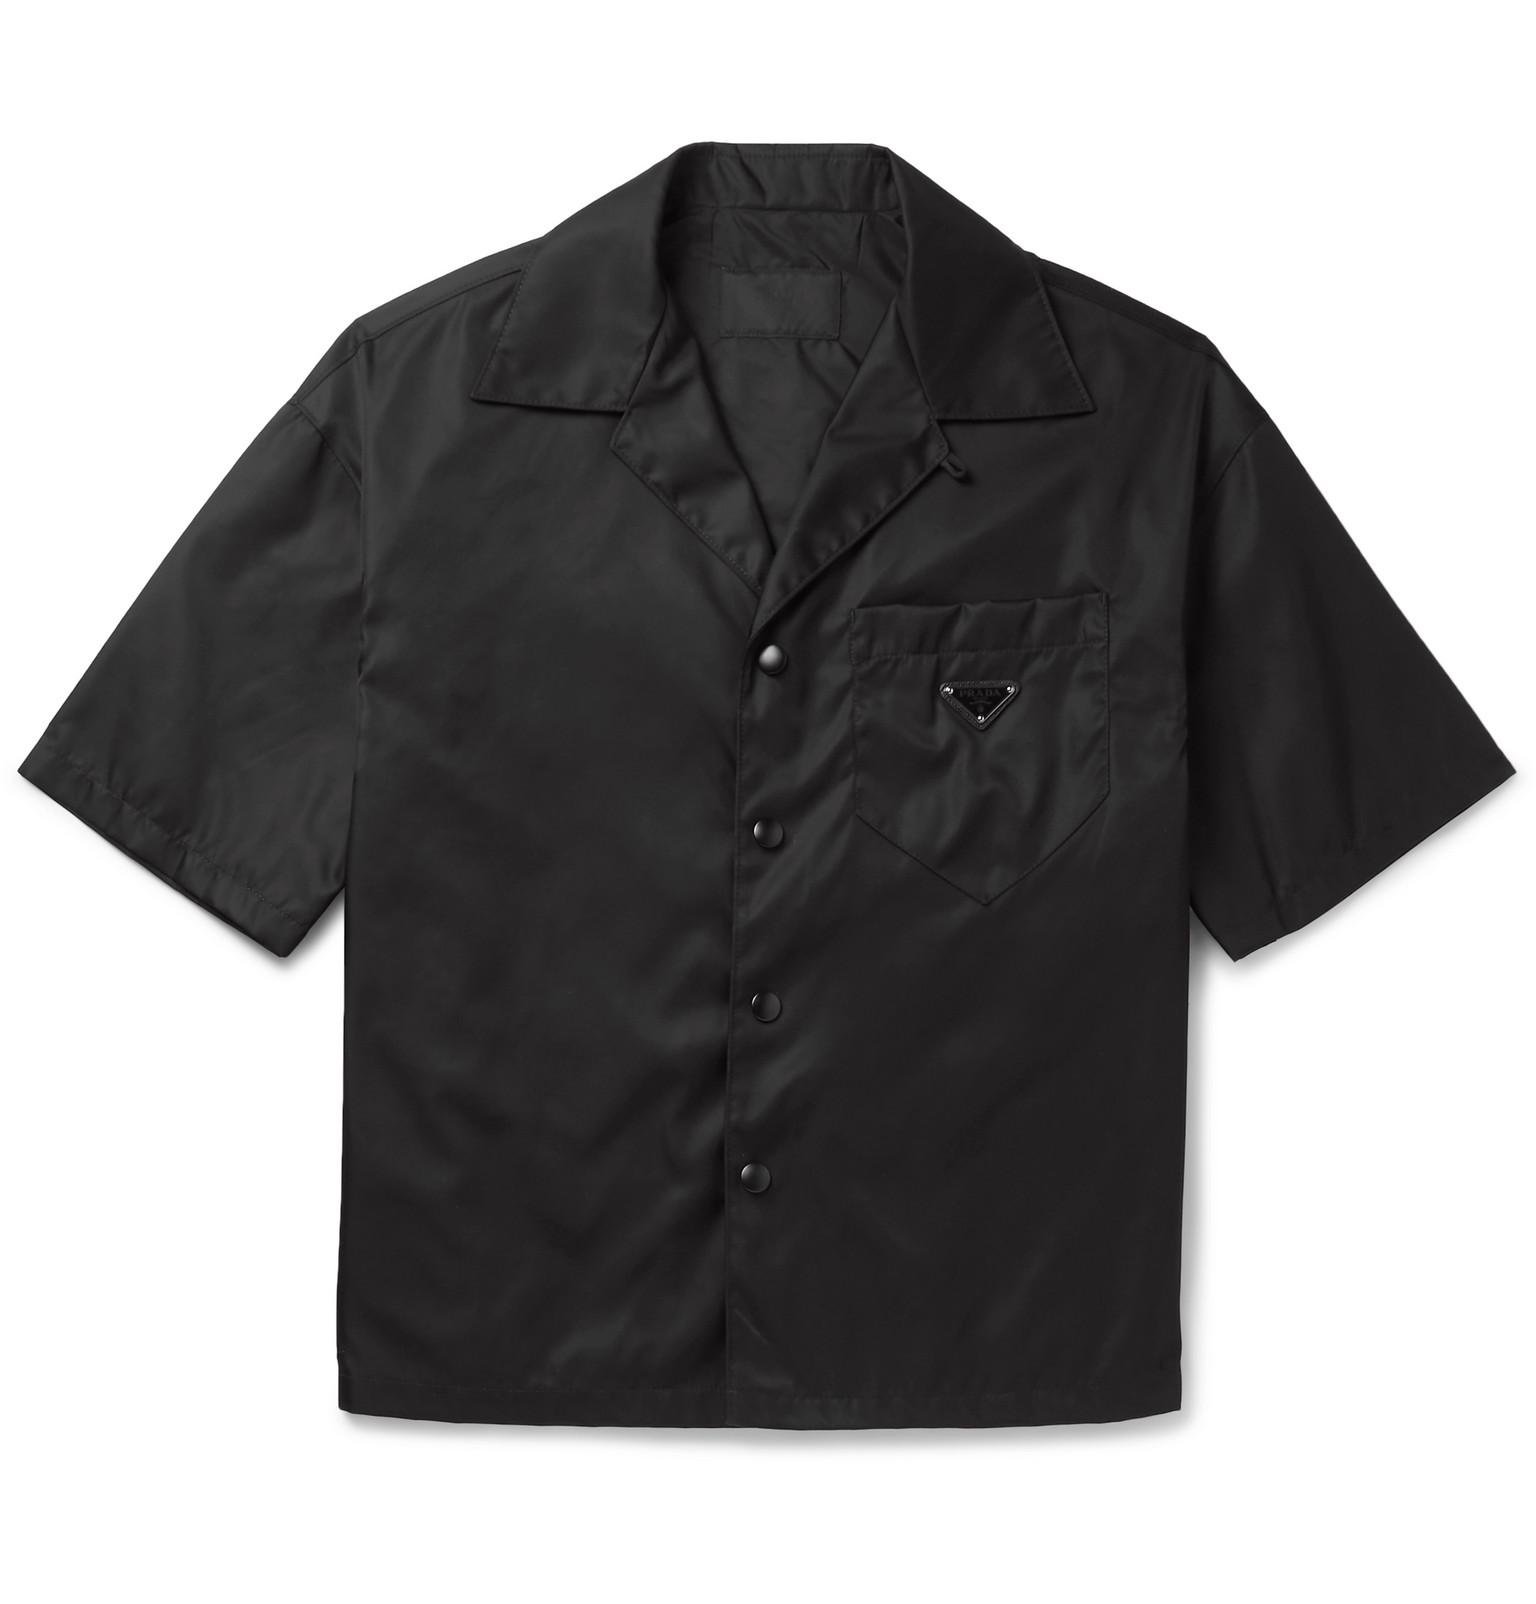 Prada Camp-collar Logo-appliquéd Nylon Overshirt in Black for Men - Lyst